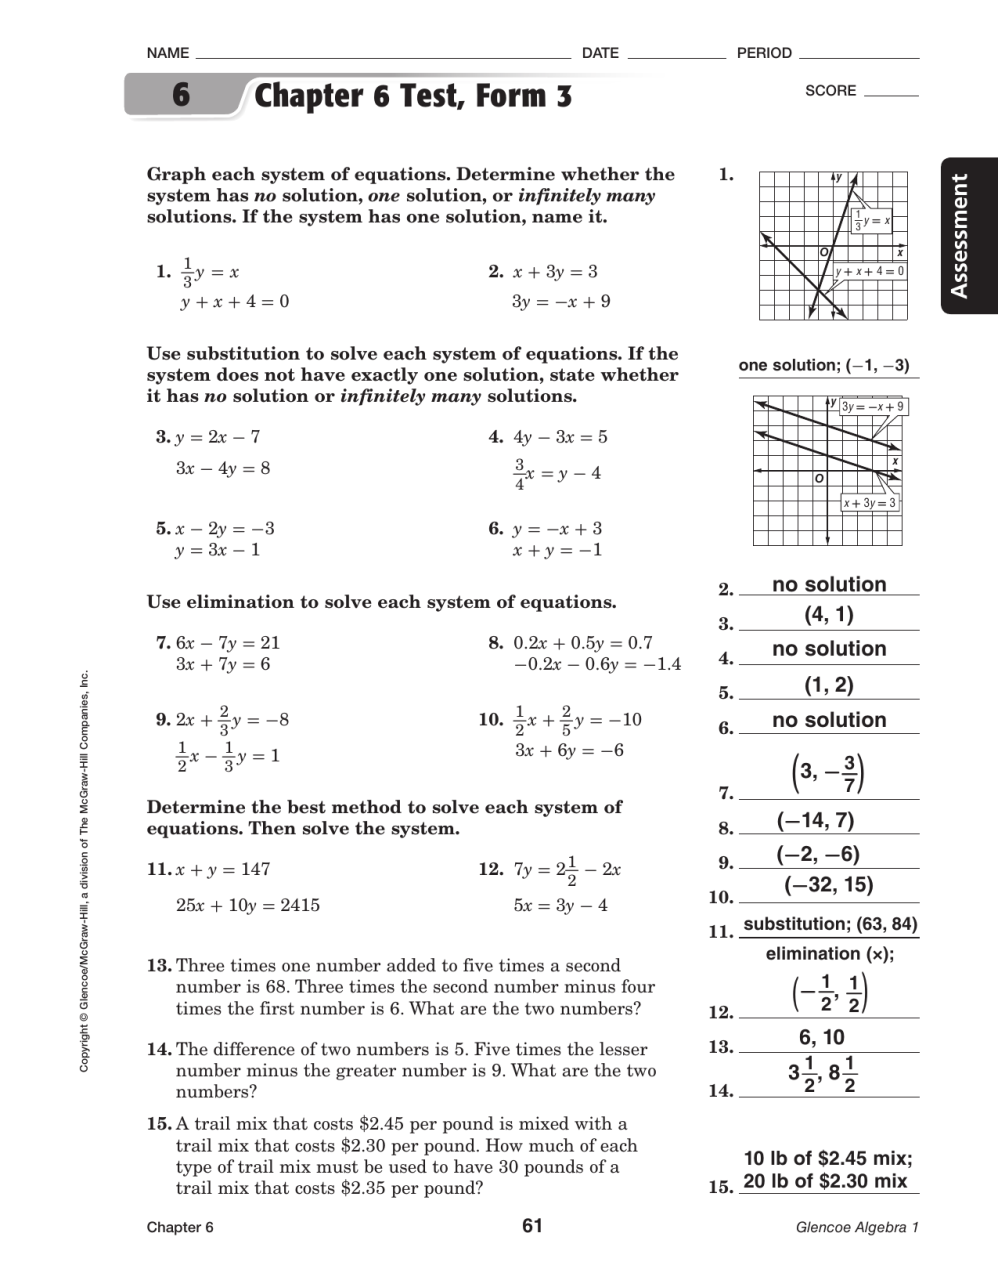 Bestseller Glencoe Algebra 1 Chapter 6 Quiz 1 Answer Key